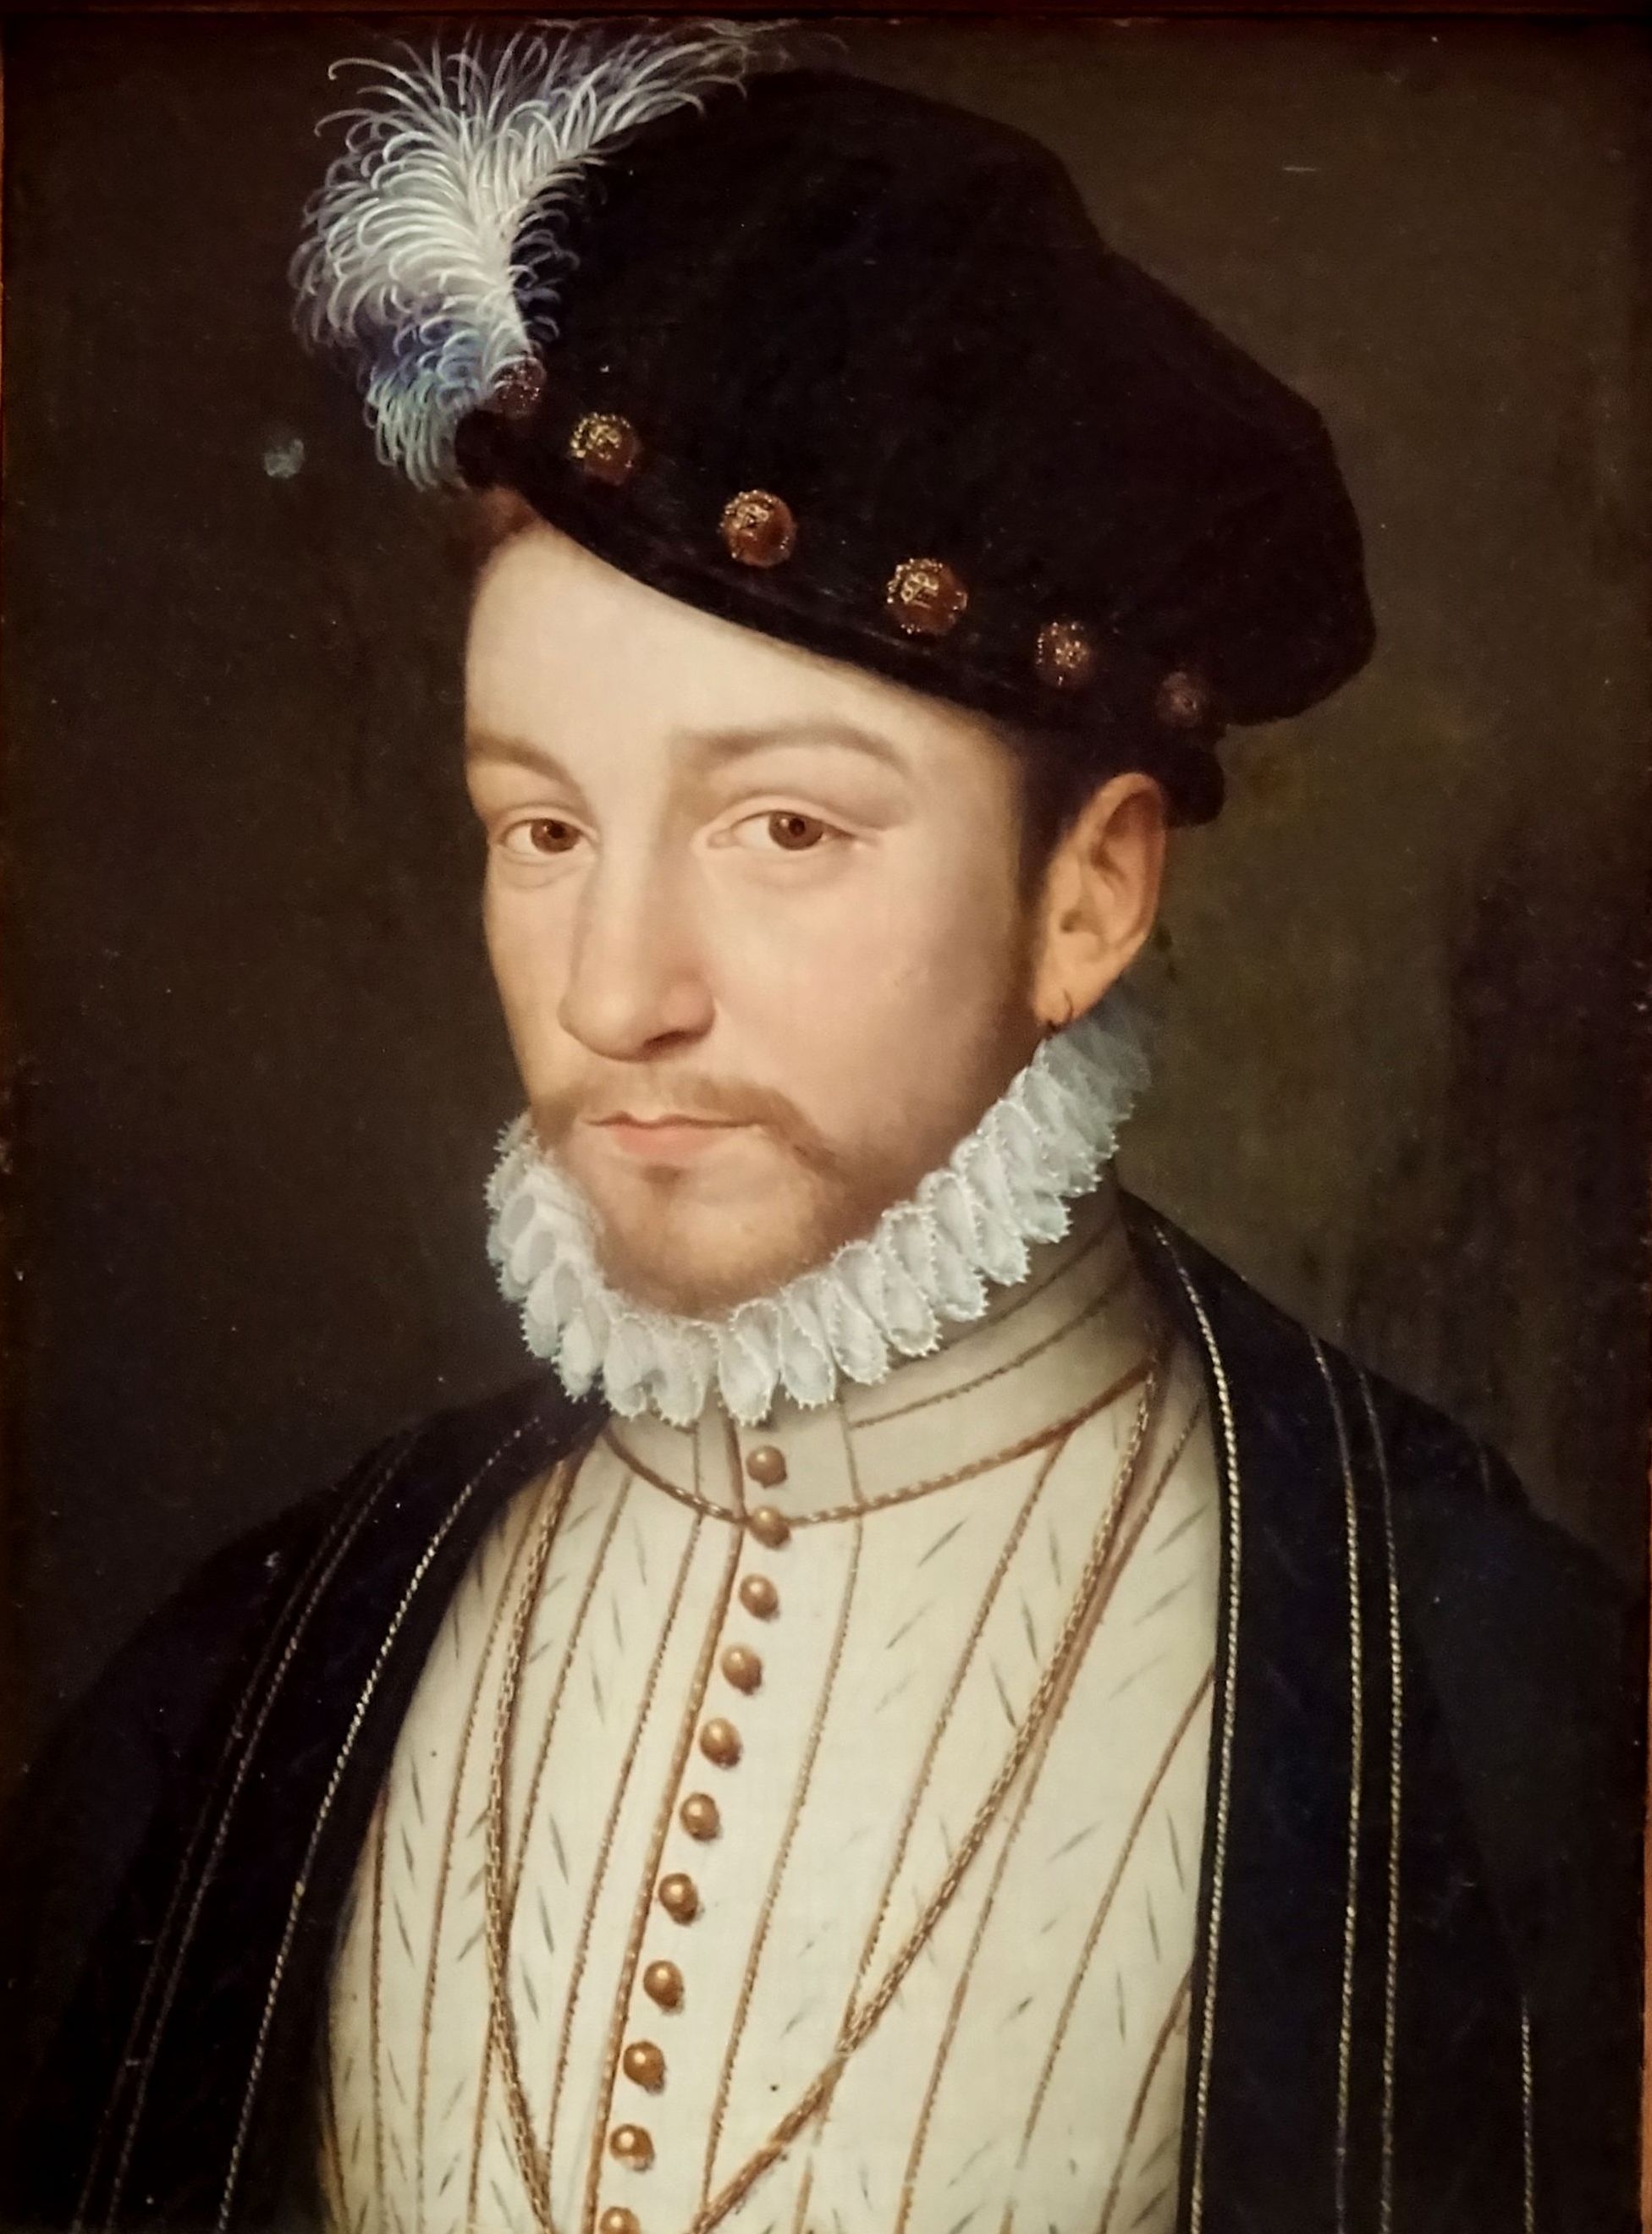 King Charles IX